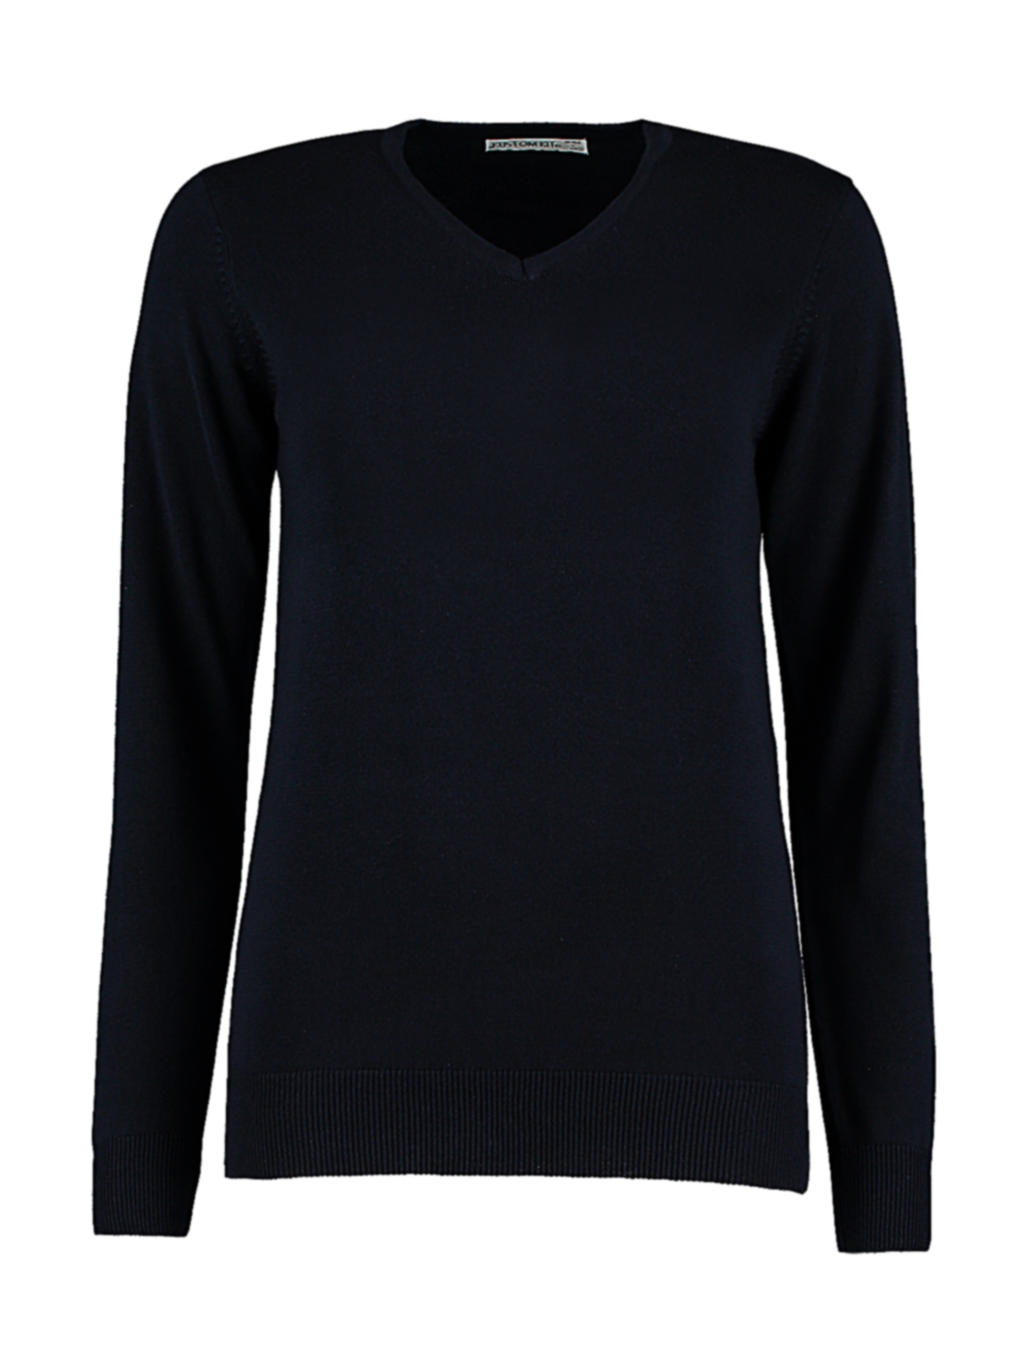 219.11 / Women`s Classic Fit Arundel Sweater / Navy